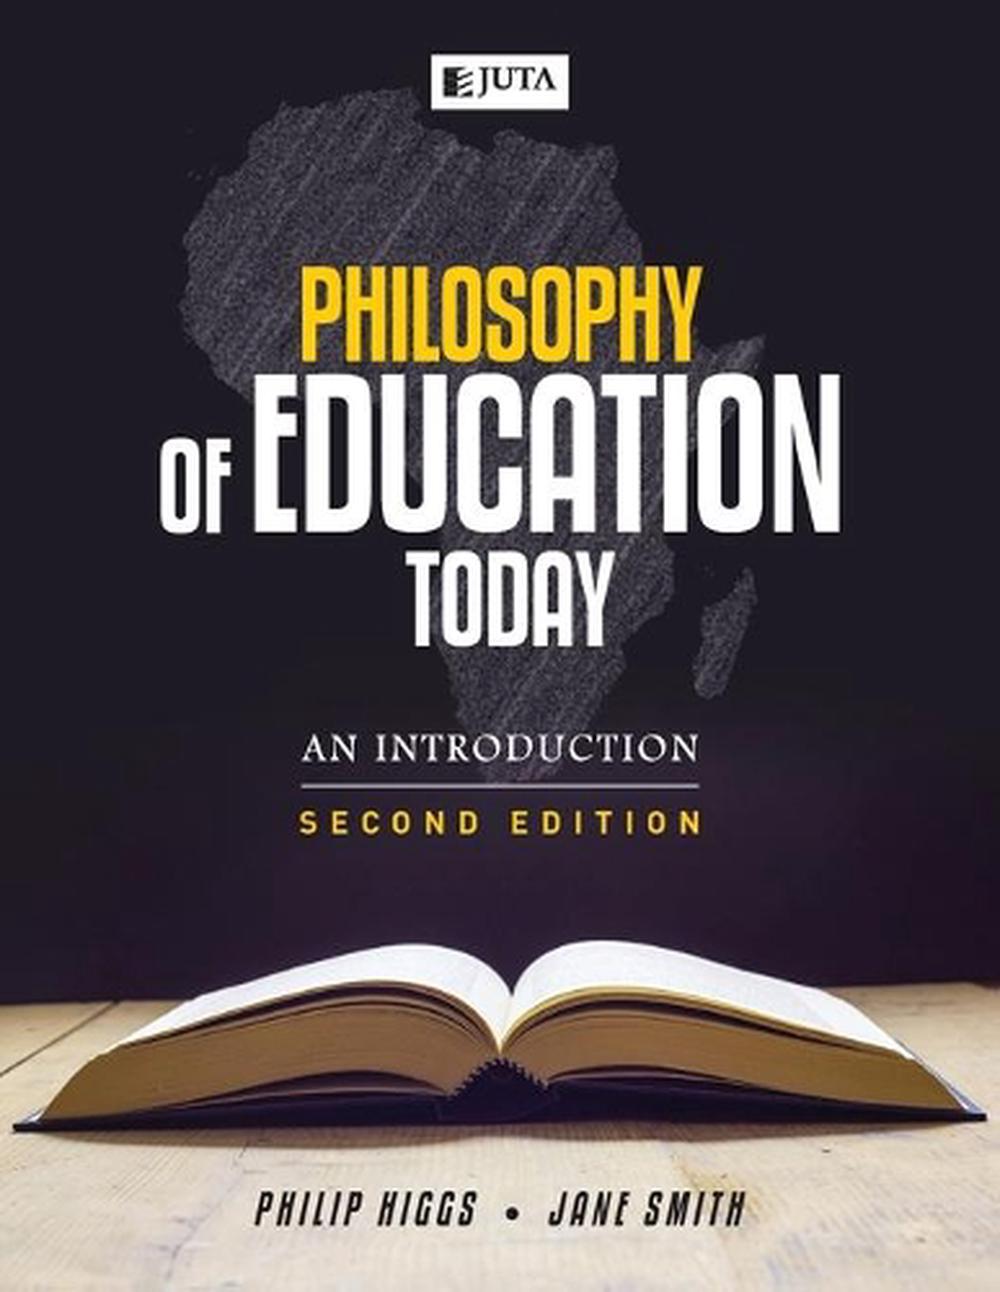 education books name